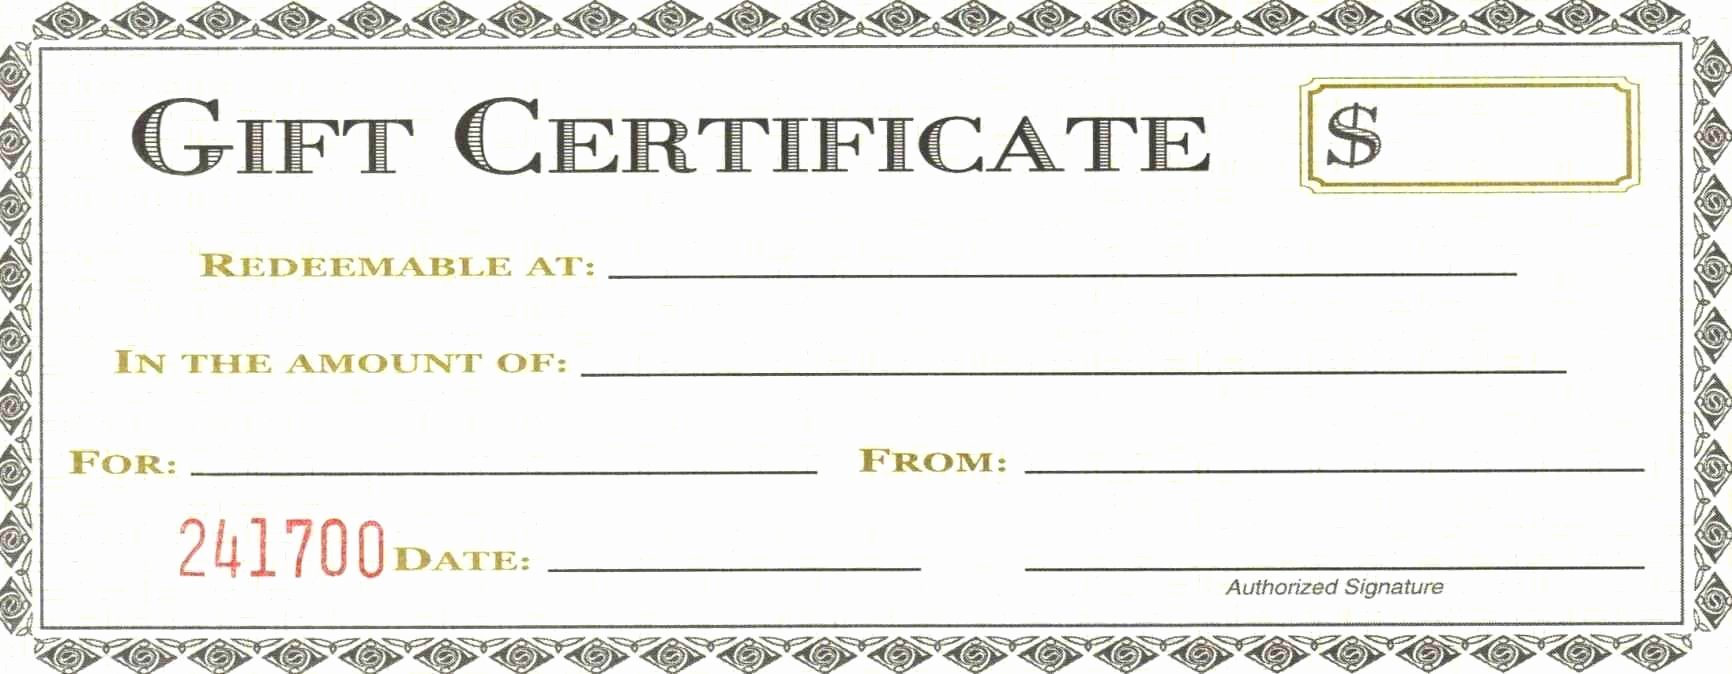 Restaurant Gift Certificate Template Beautiful Restaurant Gift Certificate Template Microsoft Word Gift